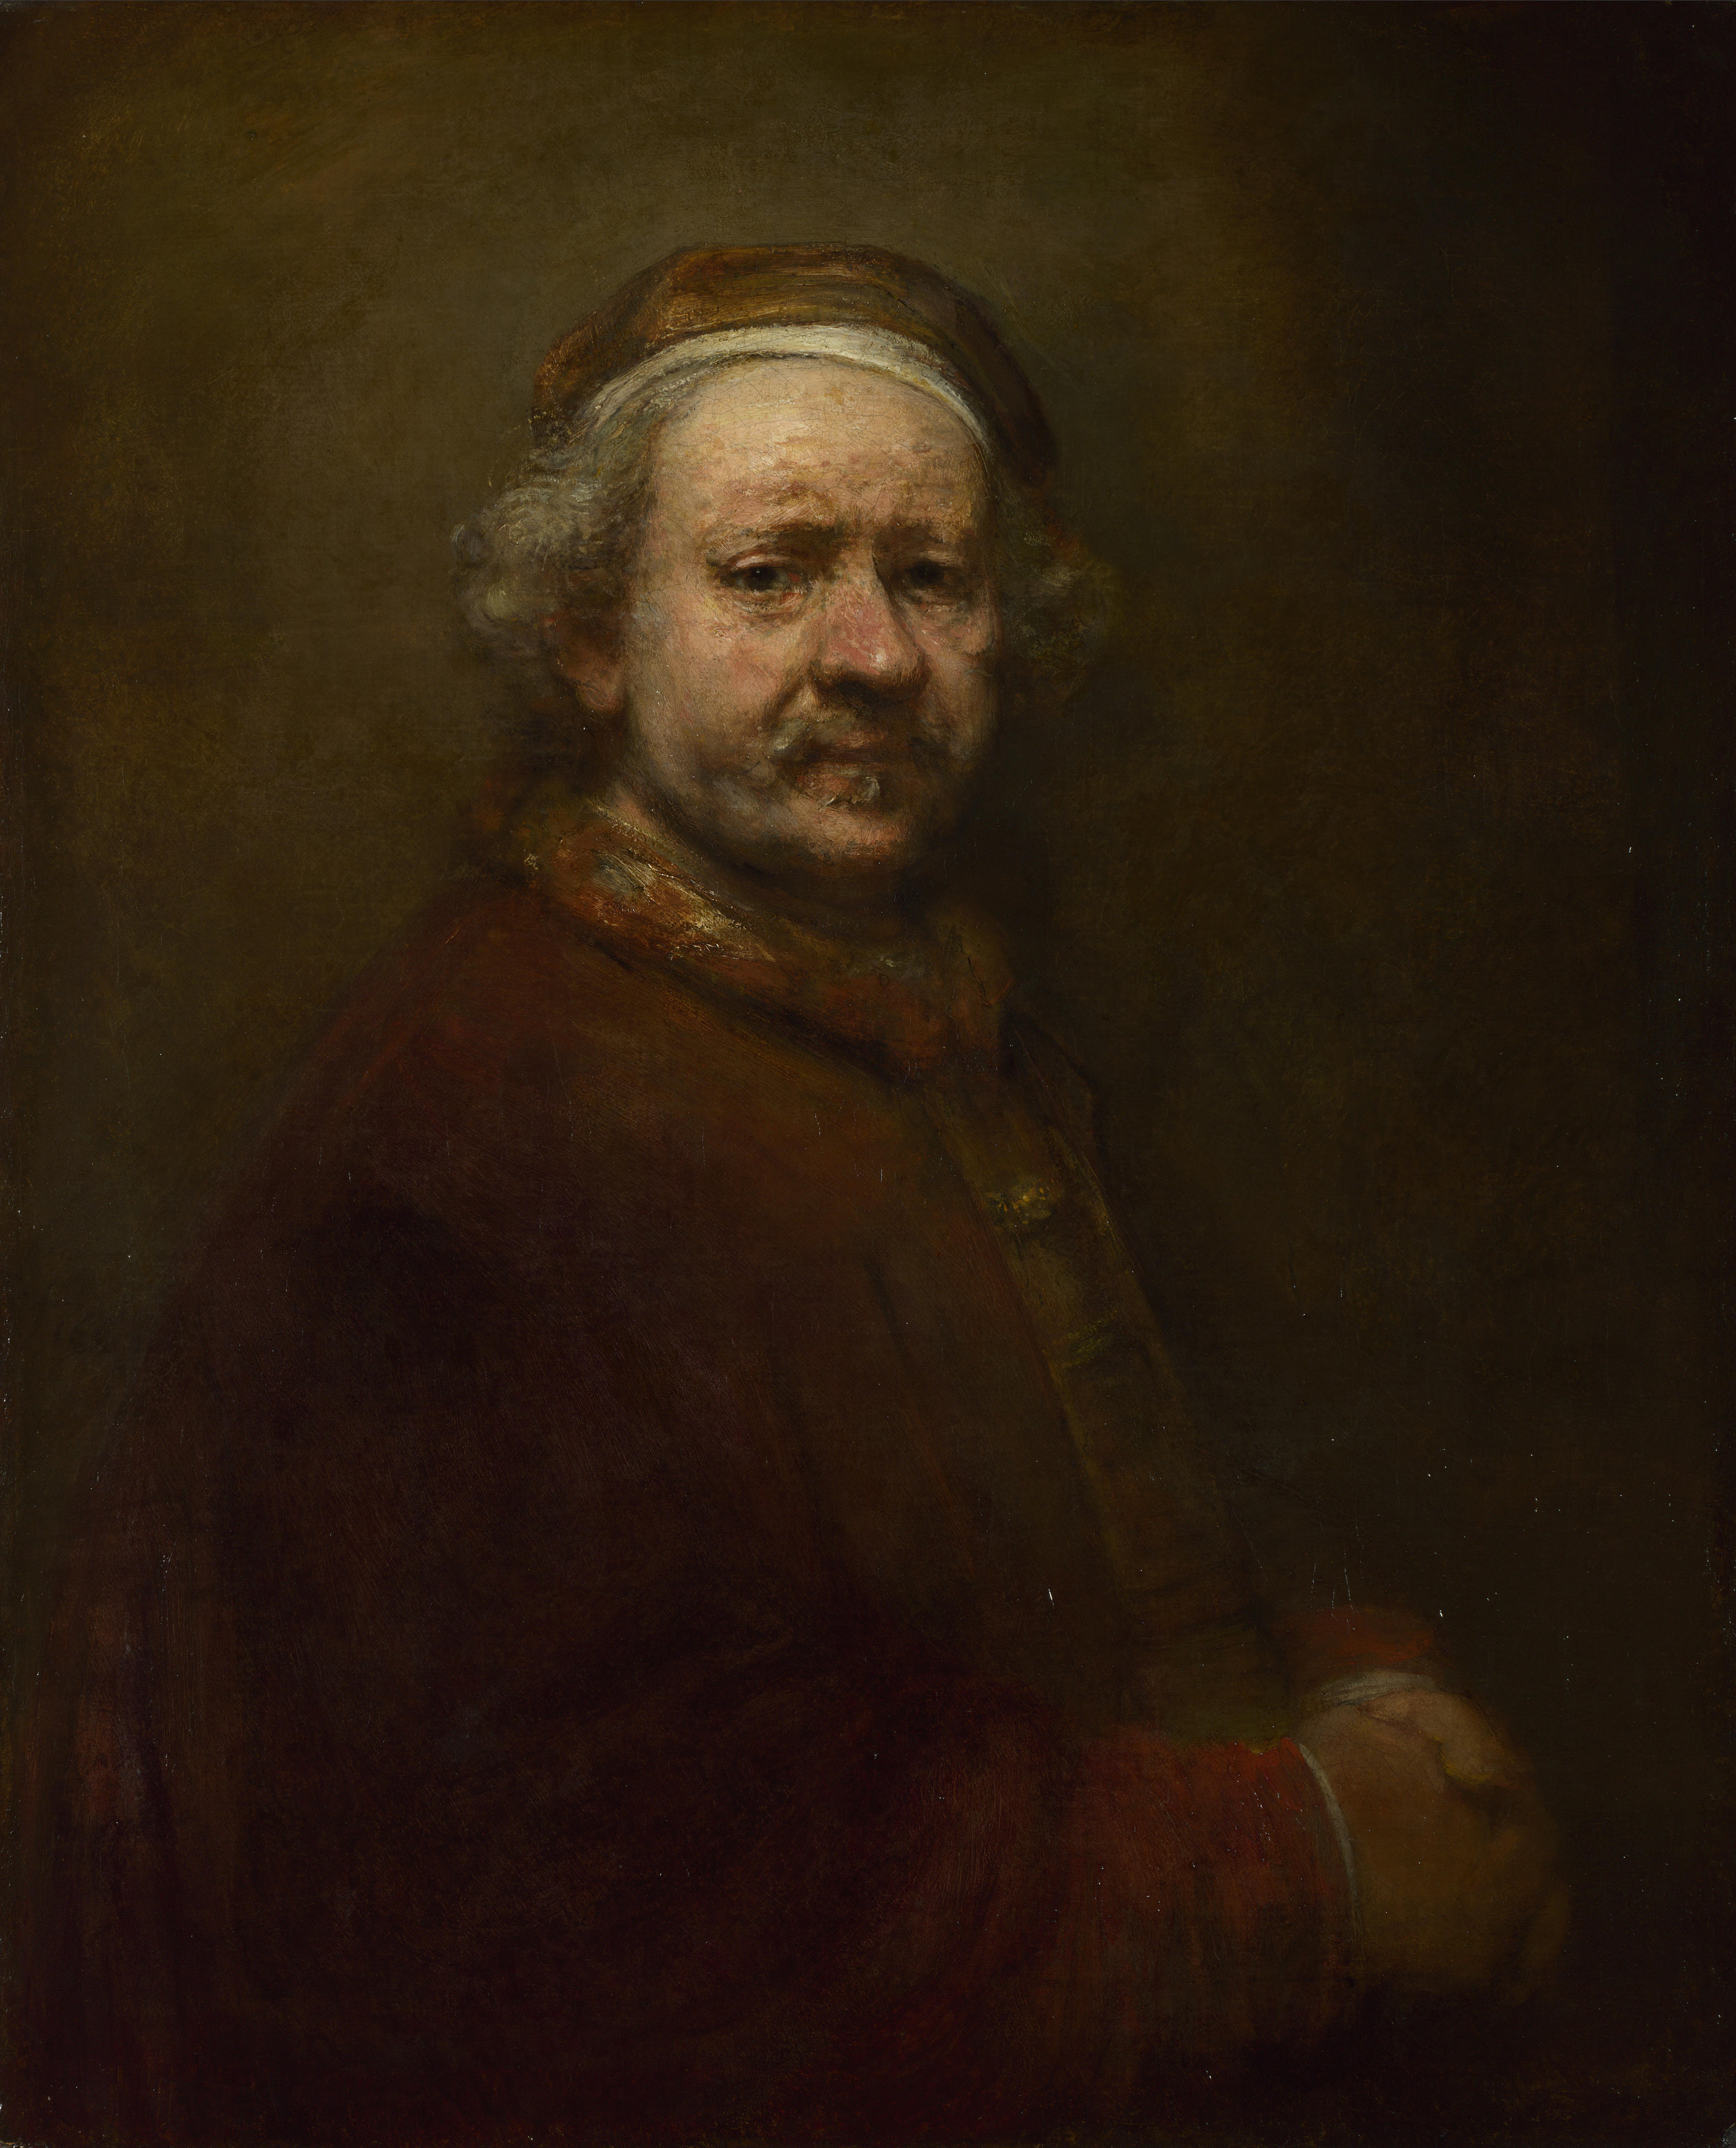 Self-portrait by Rembrandt van Rijn - 1669 - 86 x 70.5 cm National Gallery